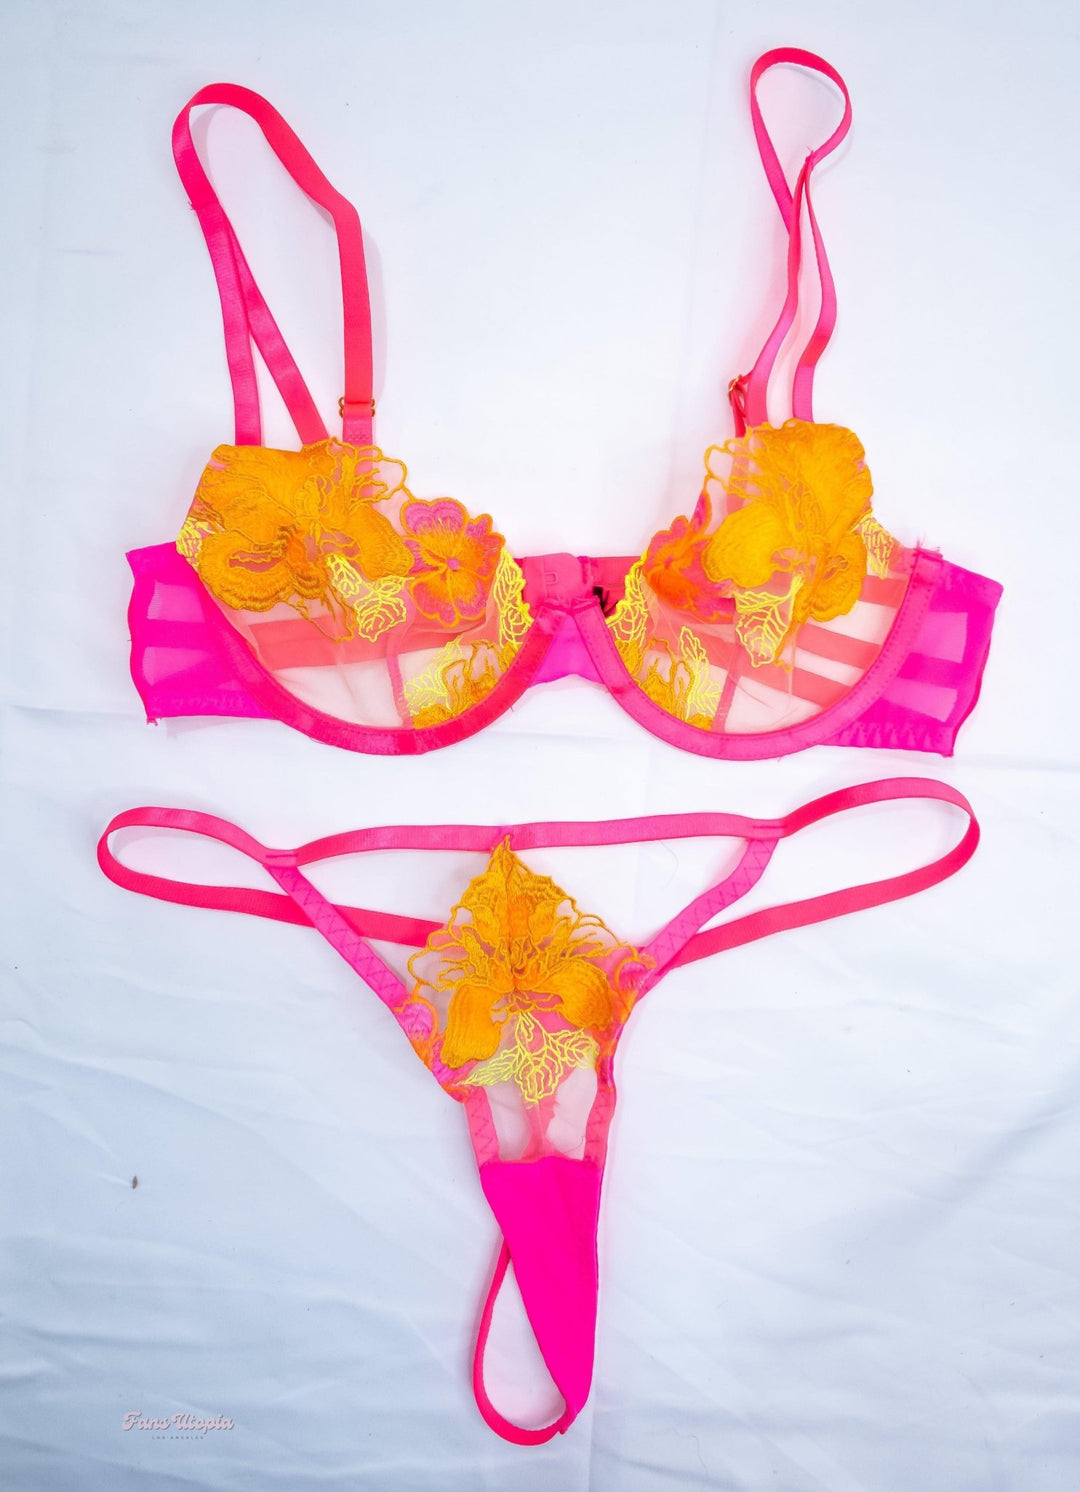 Ava Stone Pink Floral Bra & Panties Set + Signed Polaroid - FANS UTOPIA